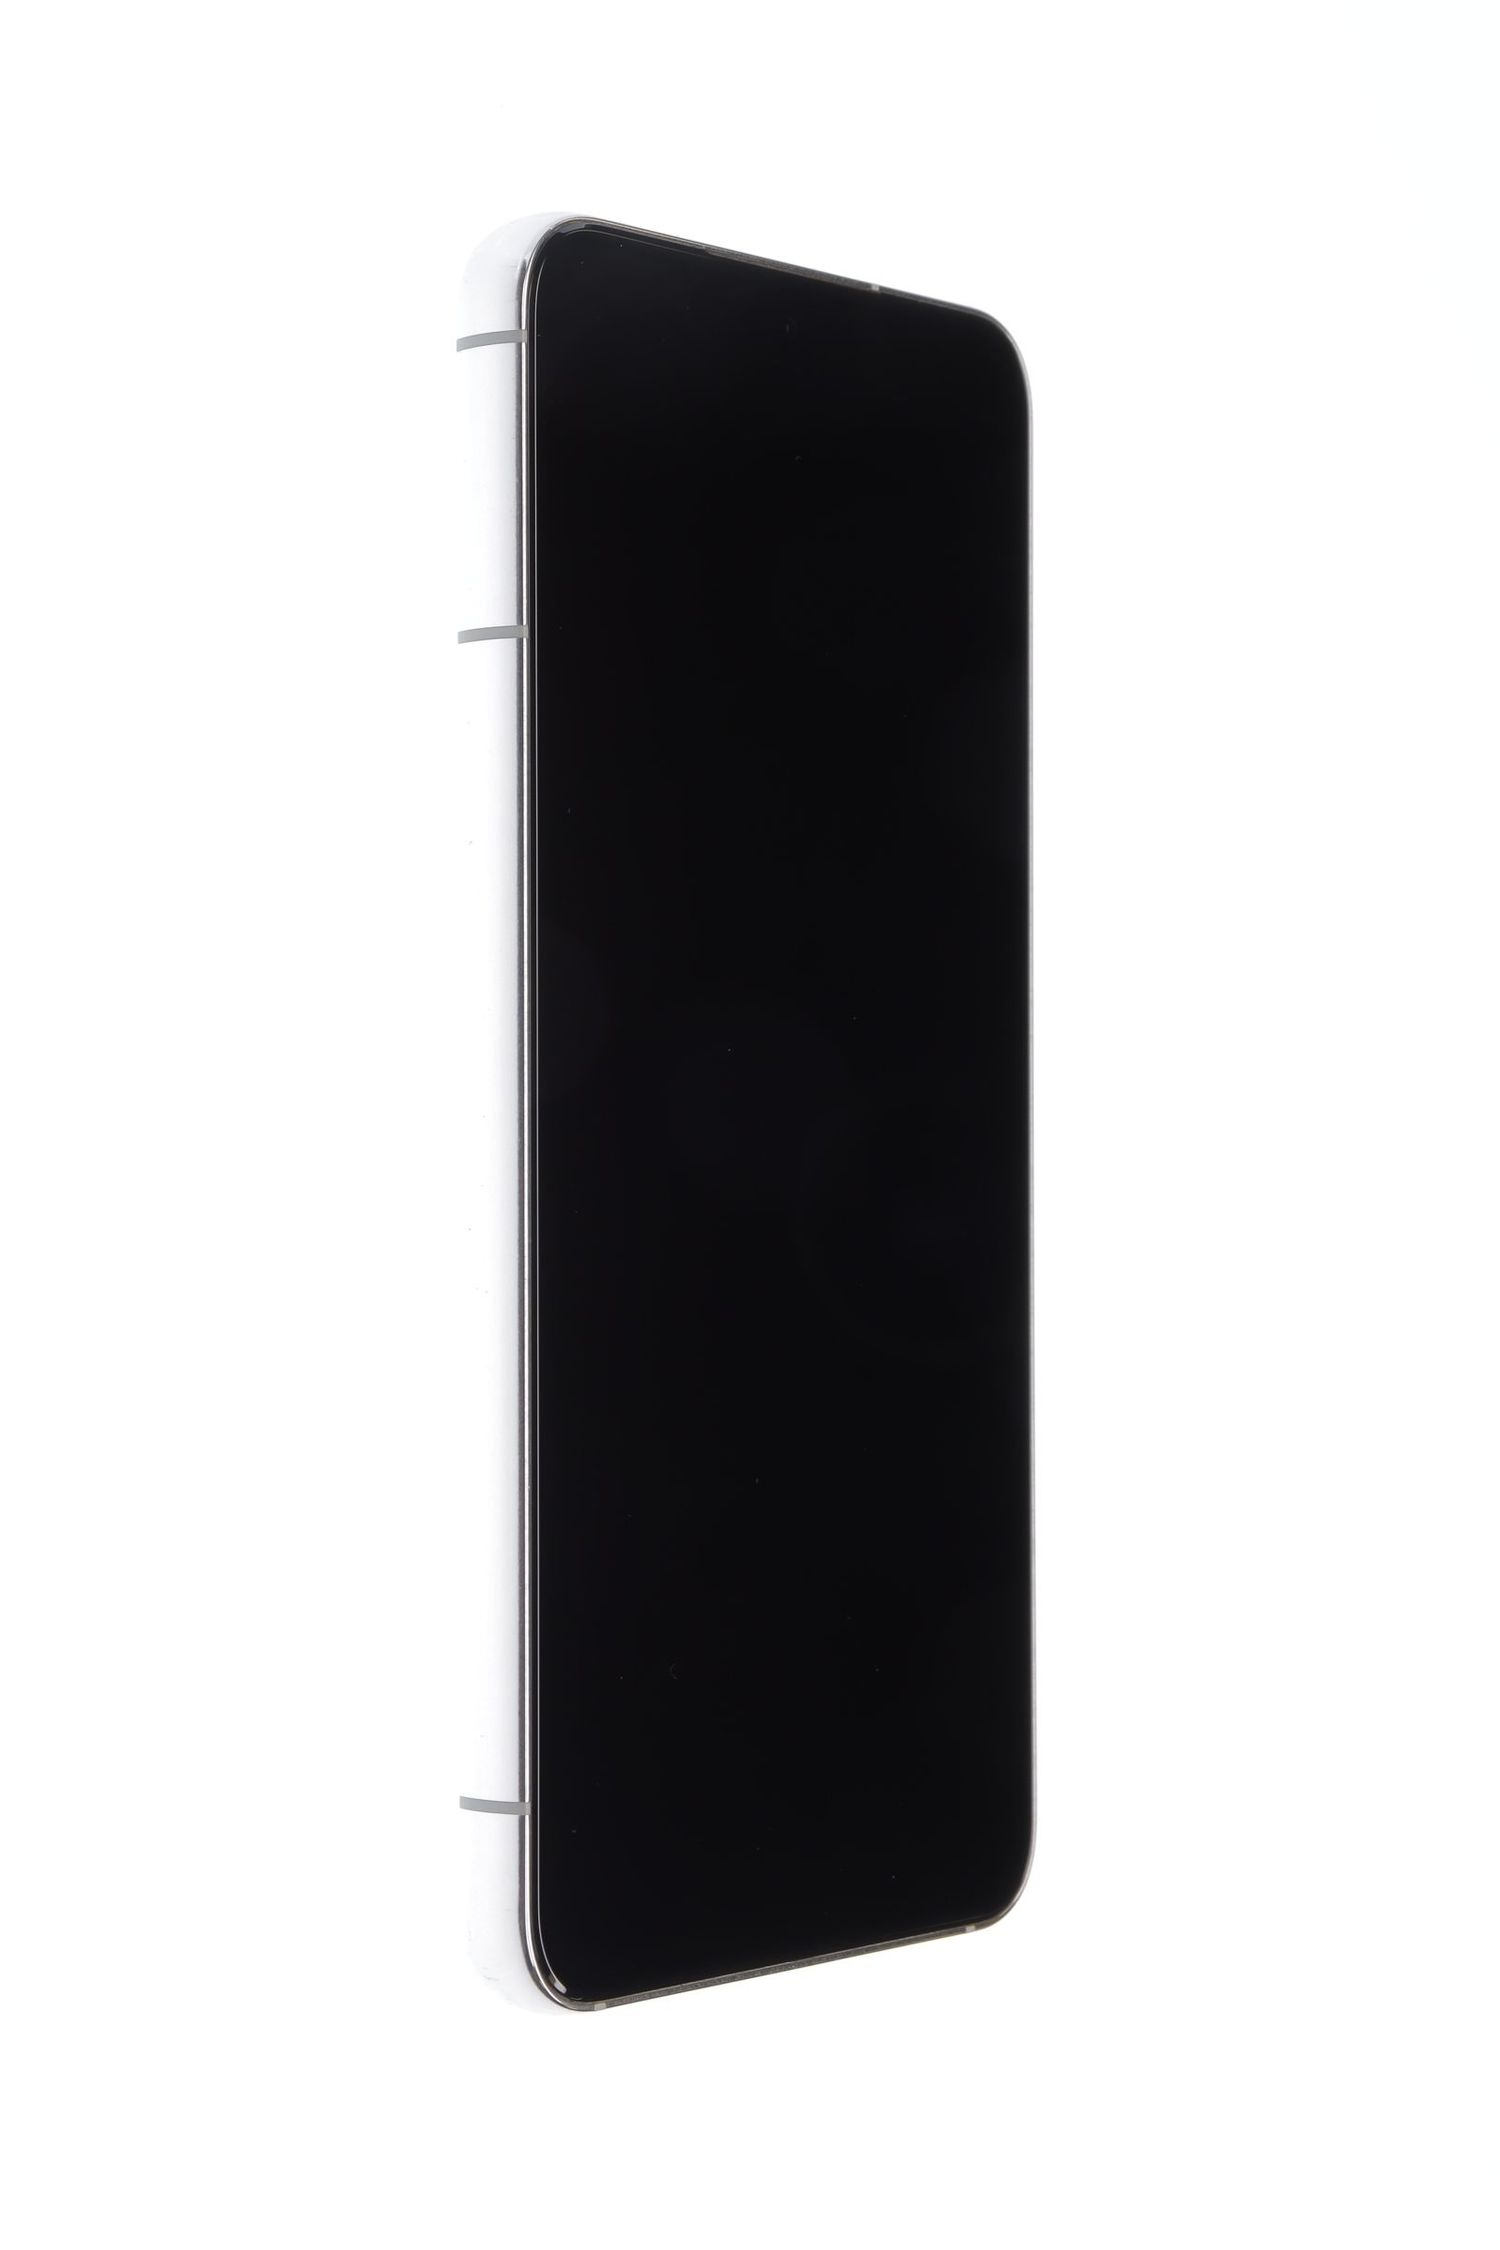 Mobiltelefon Samsung Galaxy S22 5G Dual Sim, Phantom White, 256 GB, Foarte Bun